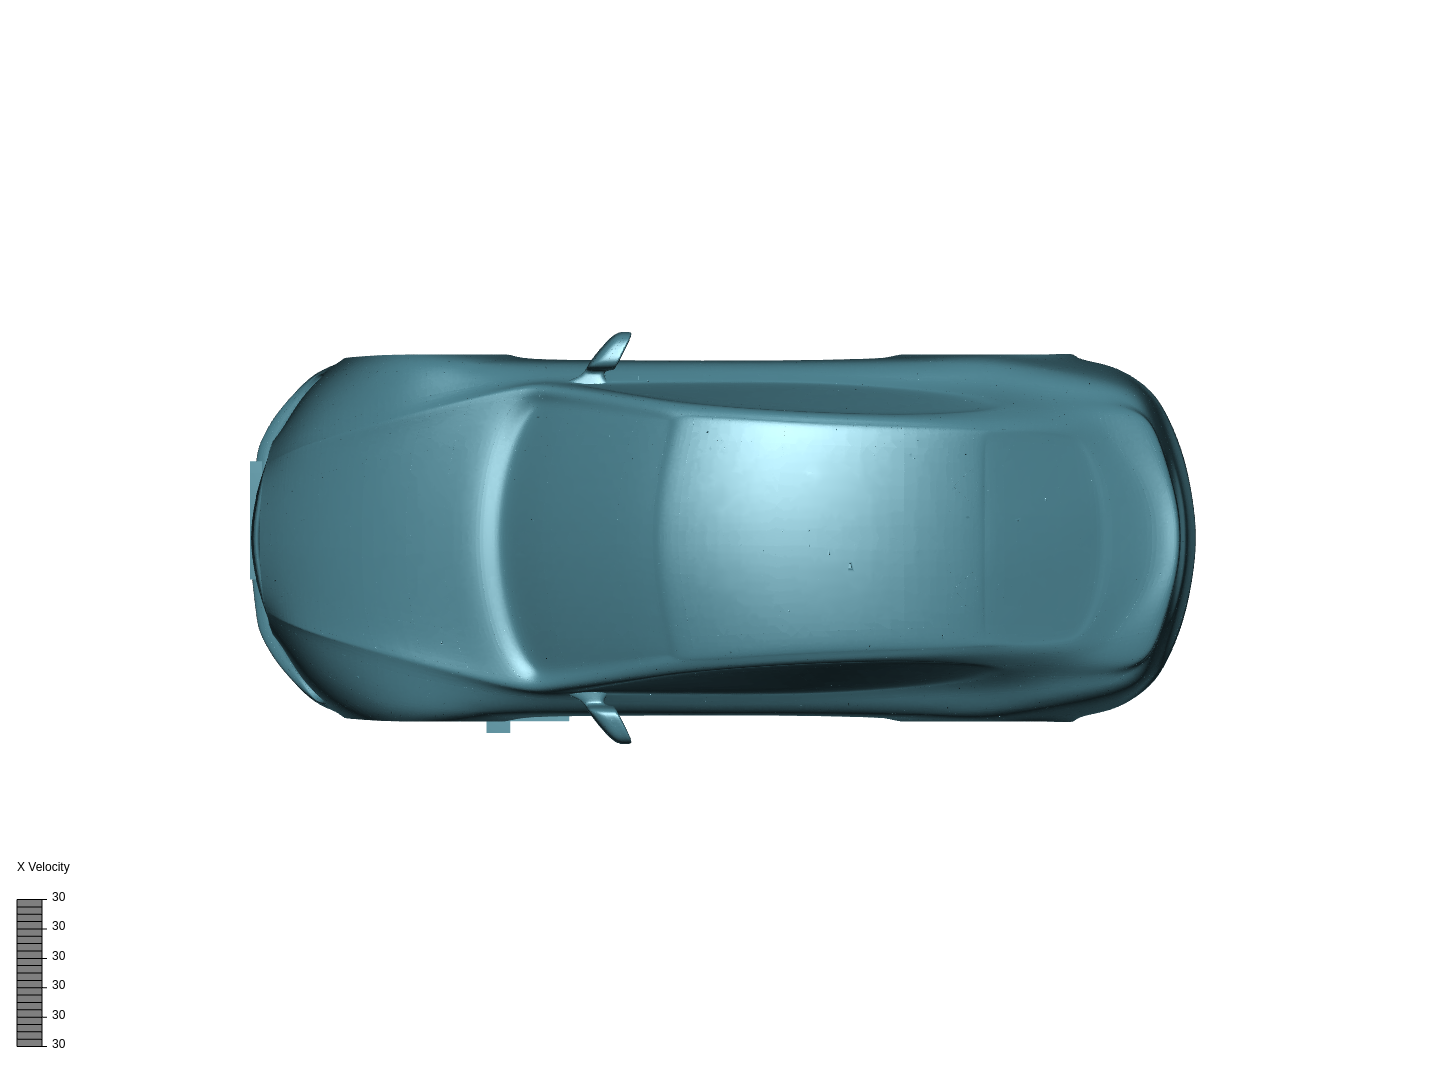 Tesla model S image